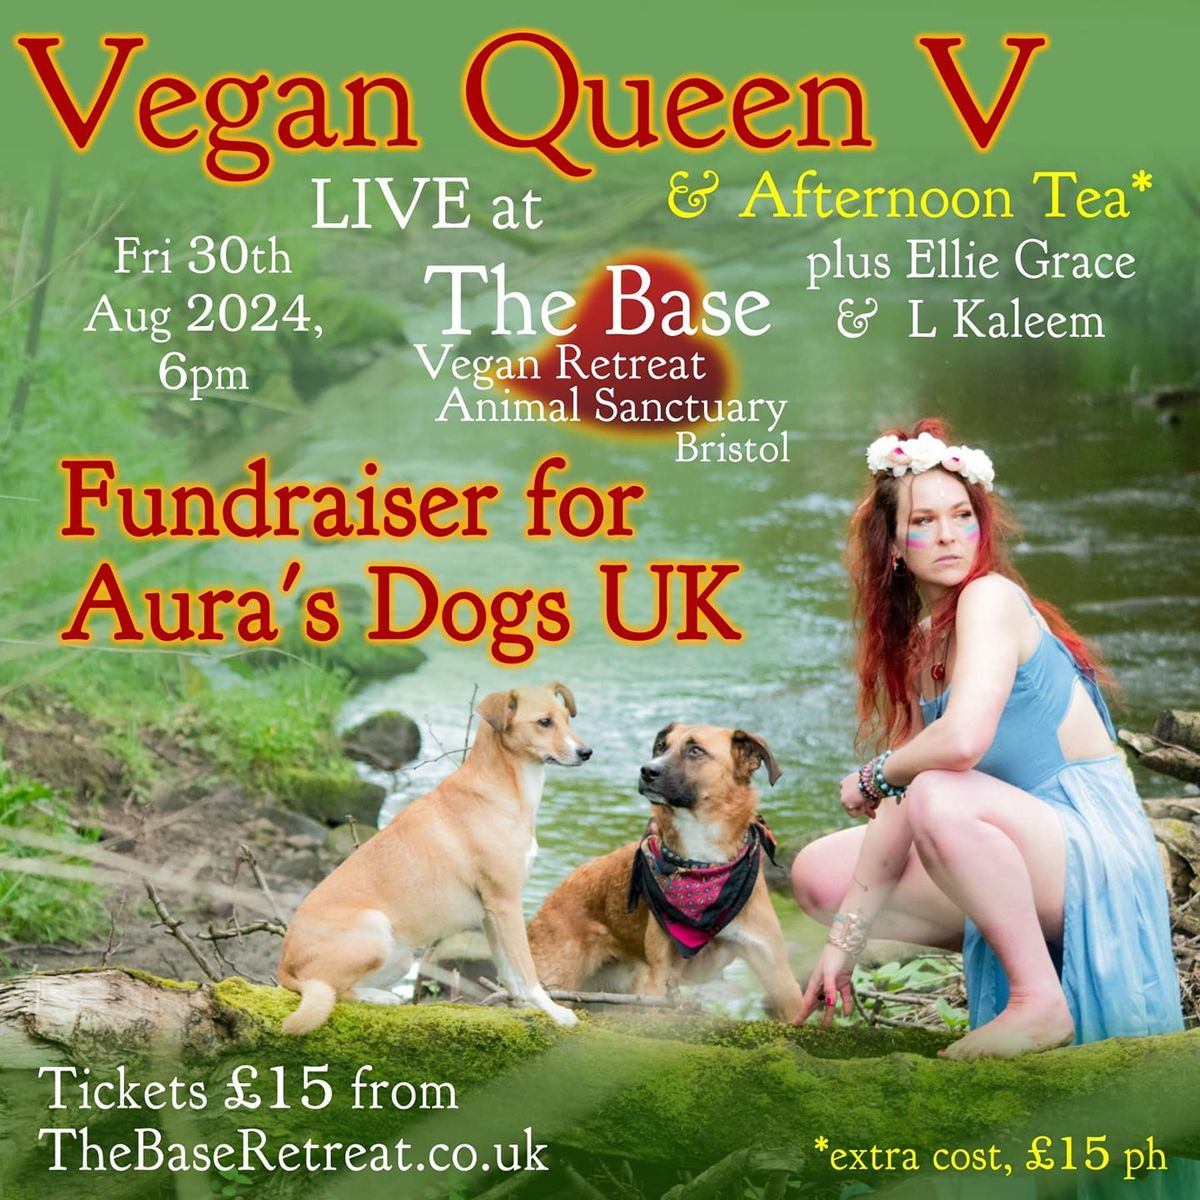 Vegan Queen V + Afternoon Tea, Fundraiser for Aura's Dogs UK